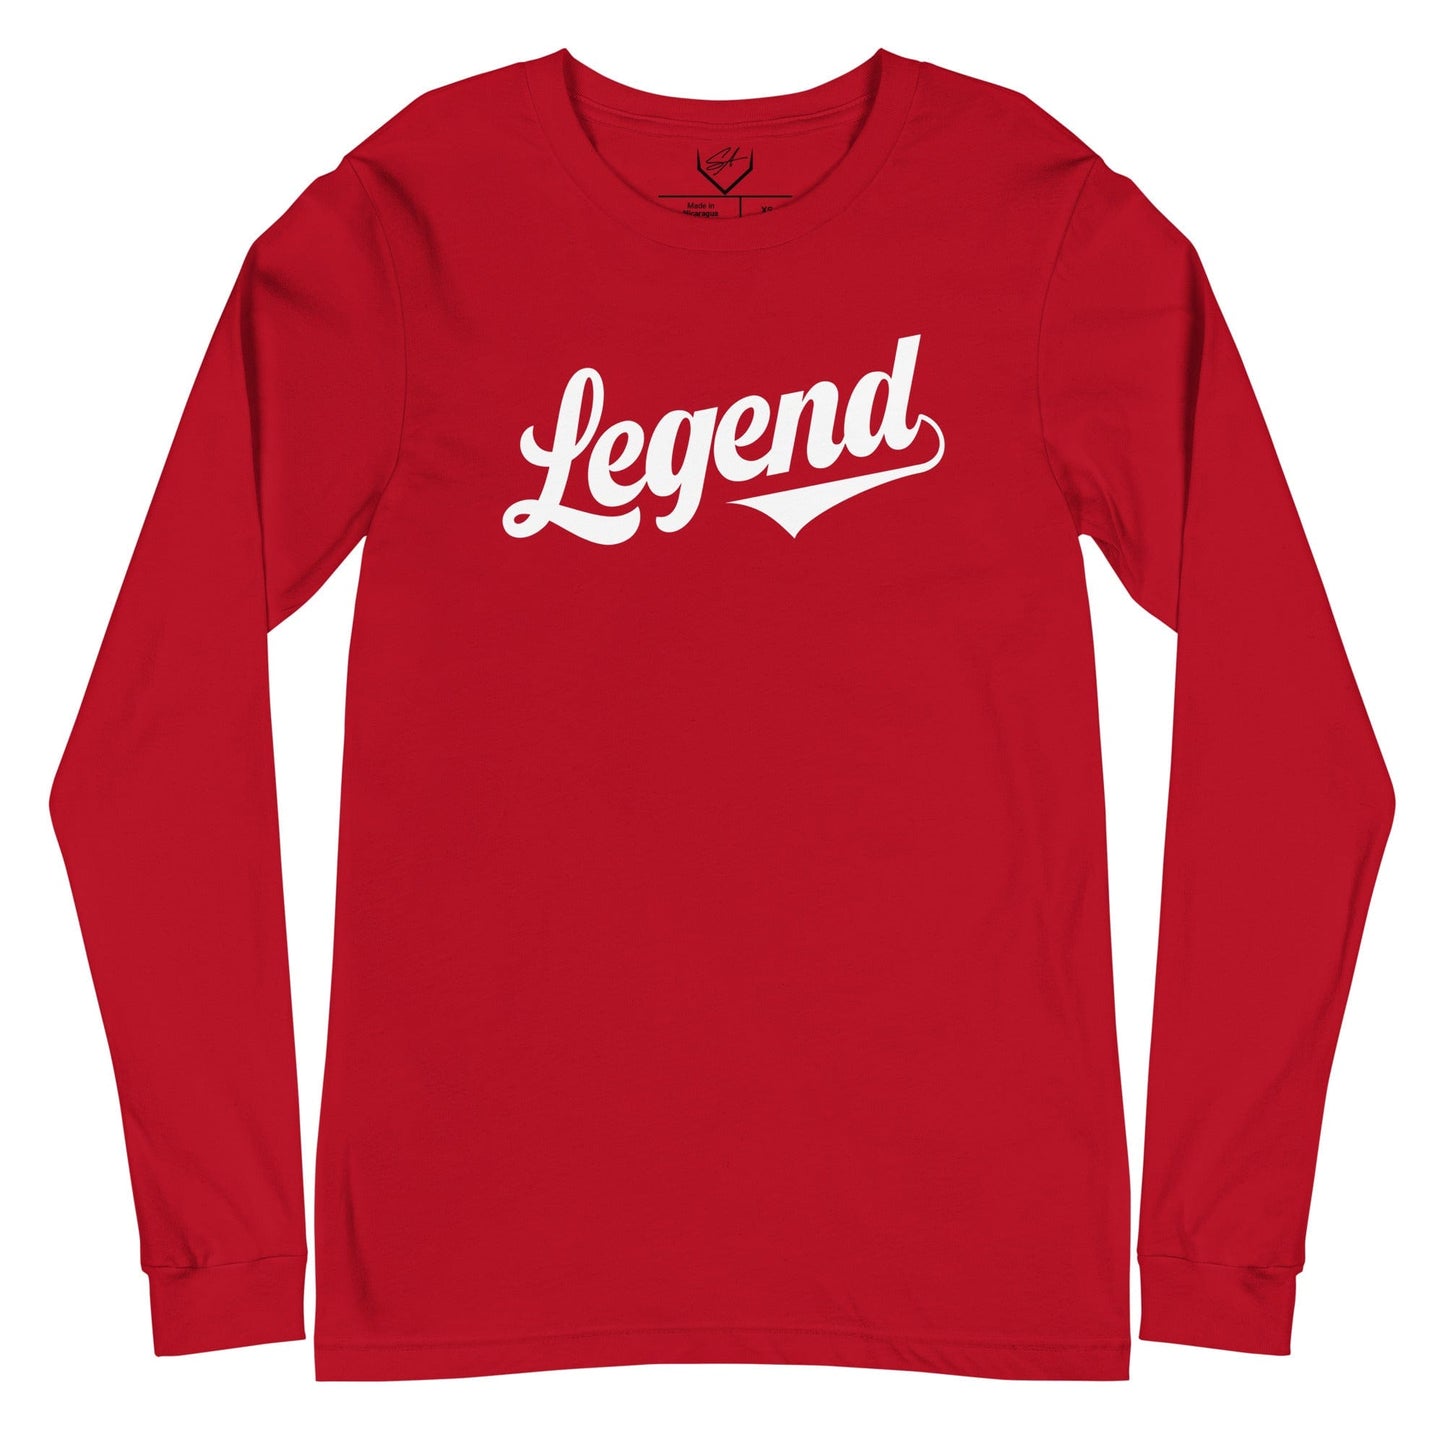 Legend - Adult Long Sleeve